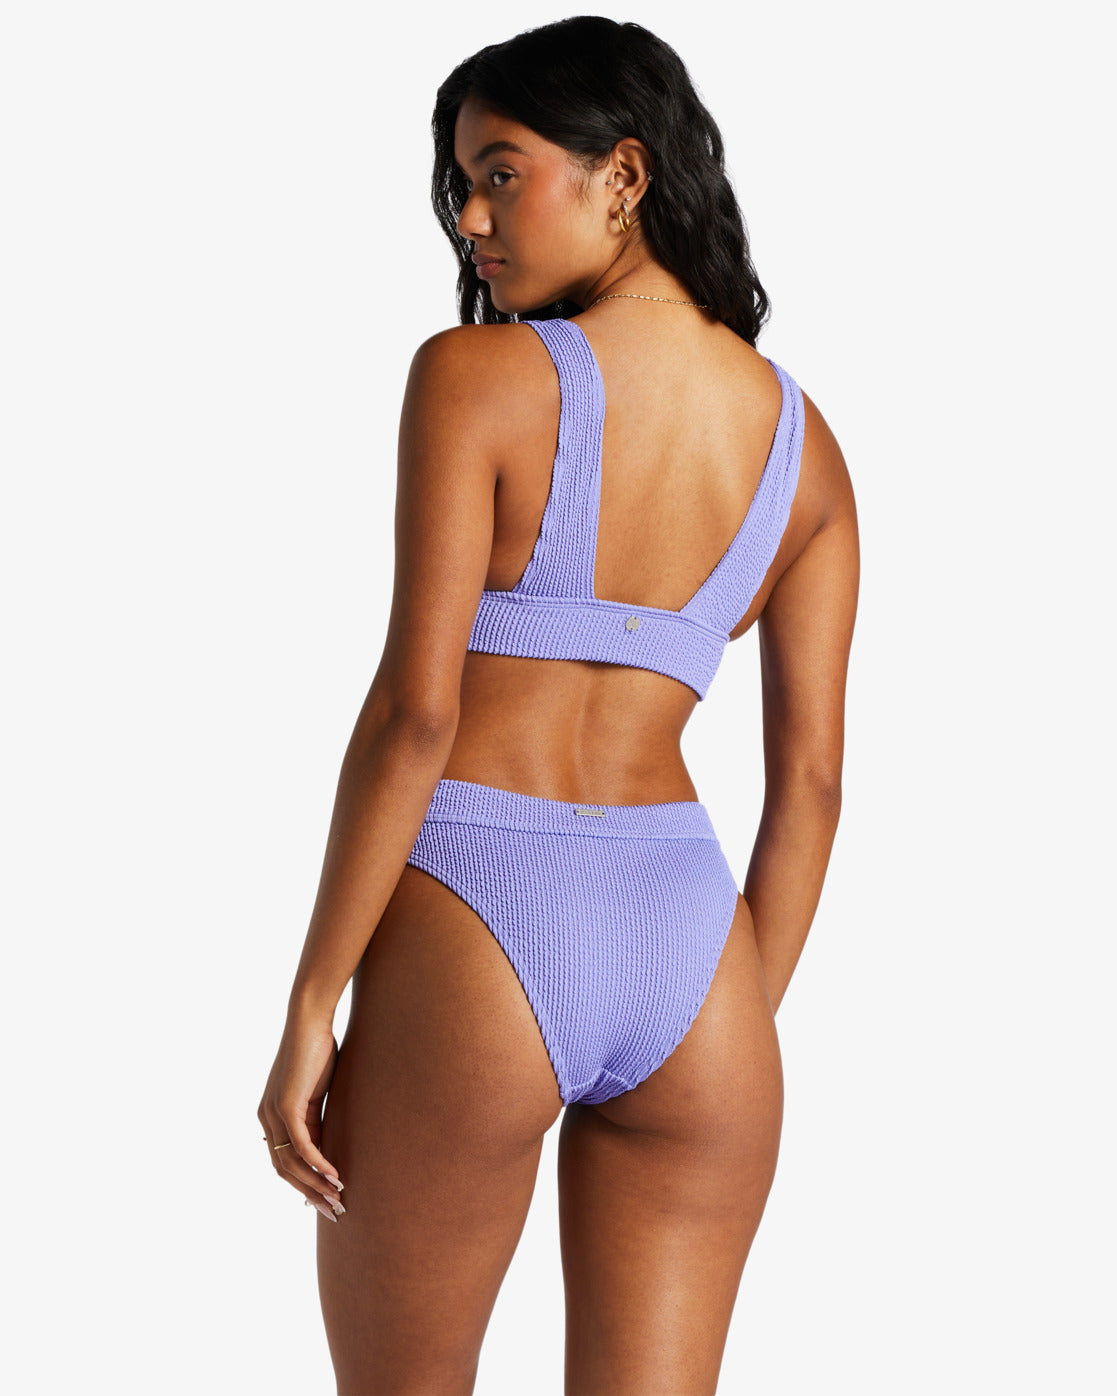 Summer High Maui Rider - Medium Coverage Bikini Bottoms for Women